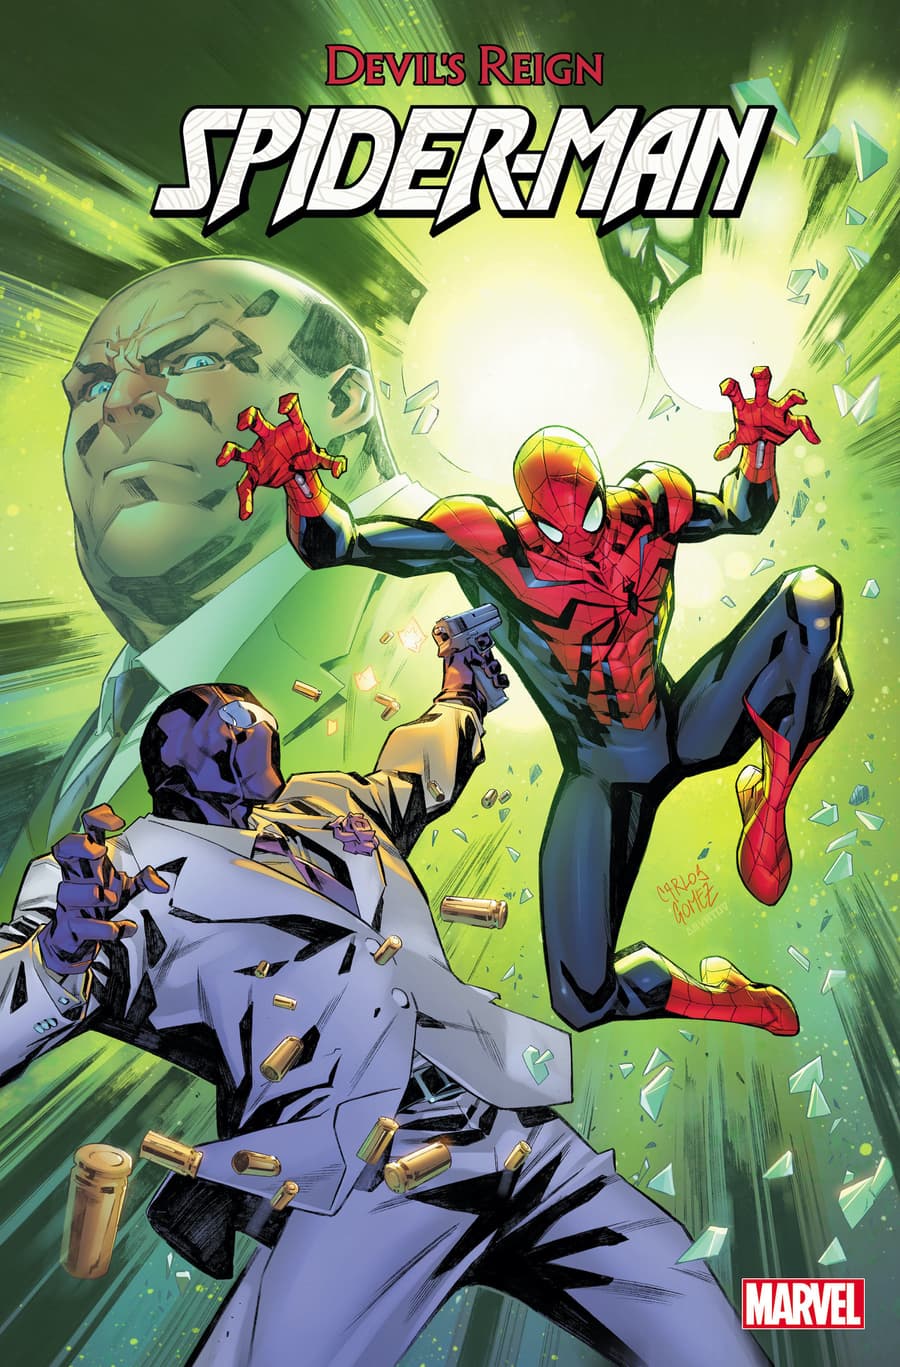 DEVIL’S REIGN: SPIDER-MAN #1 Cover by CARLOS GÓMEZ